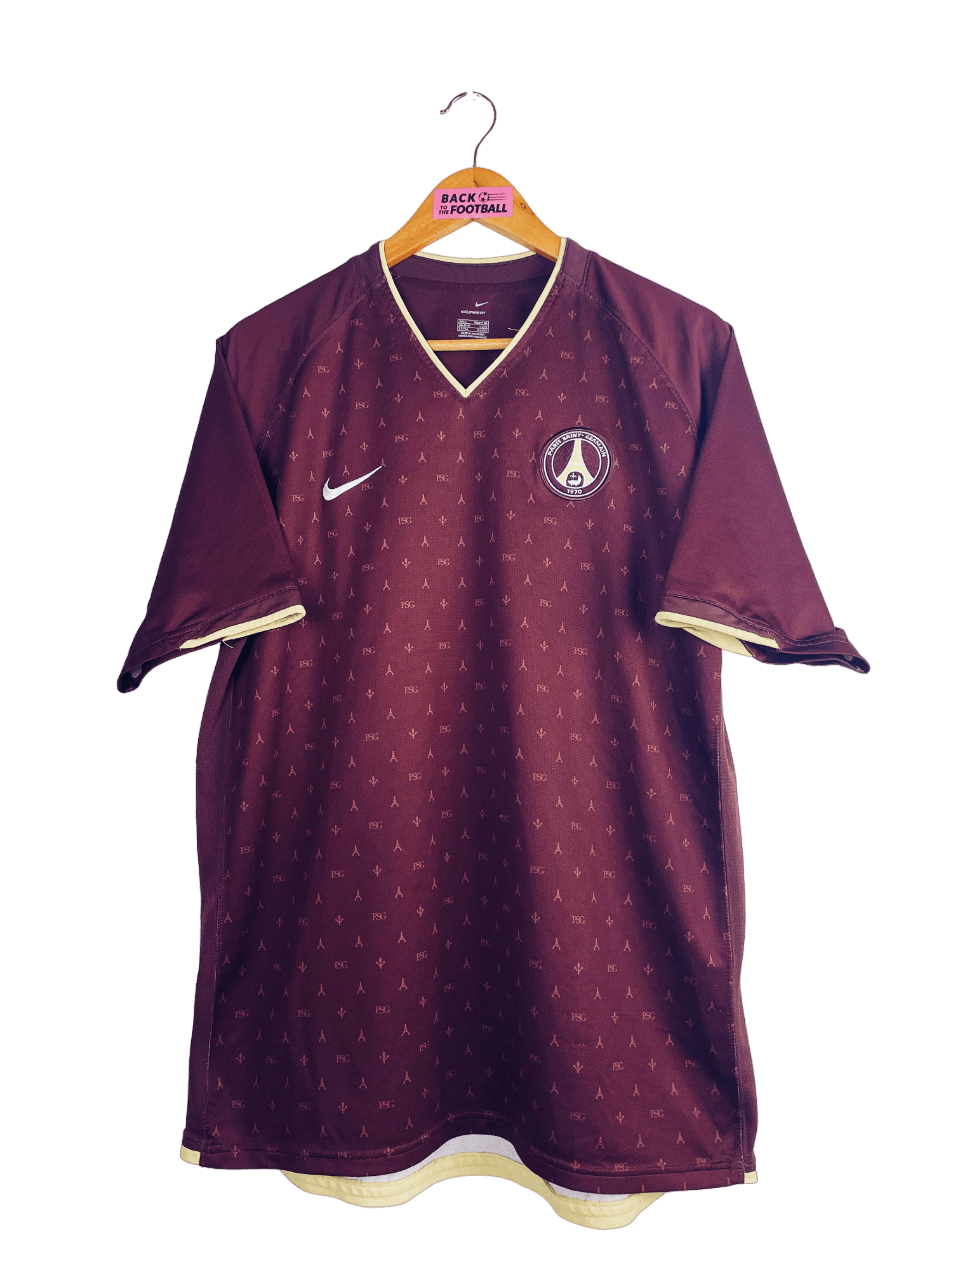 2006 / 2007 - Paris Saint Germain (L)